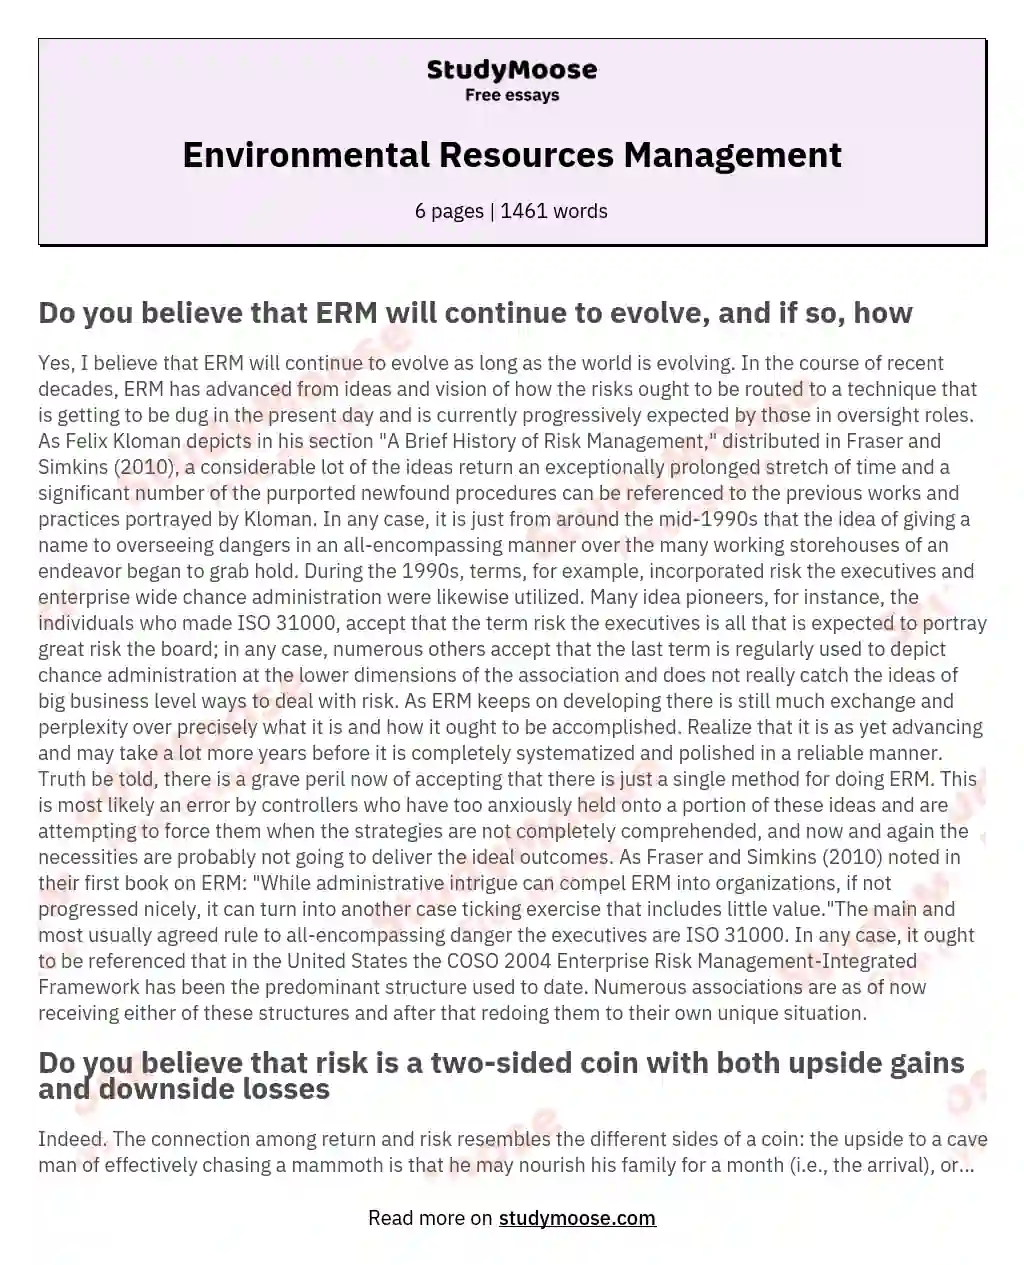 Environmental Resources Management essay